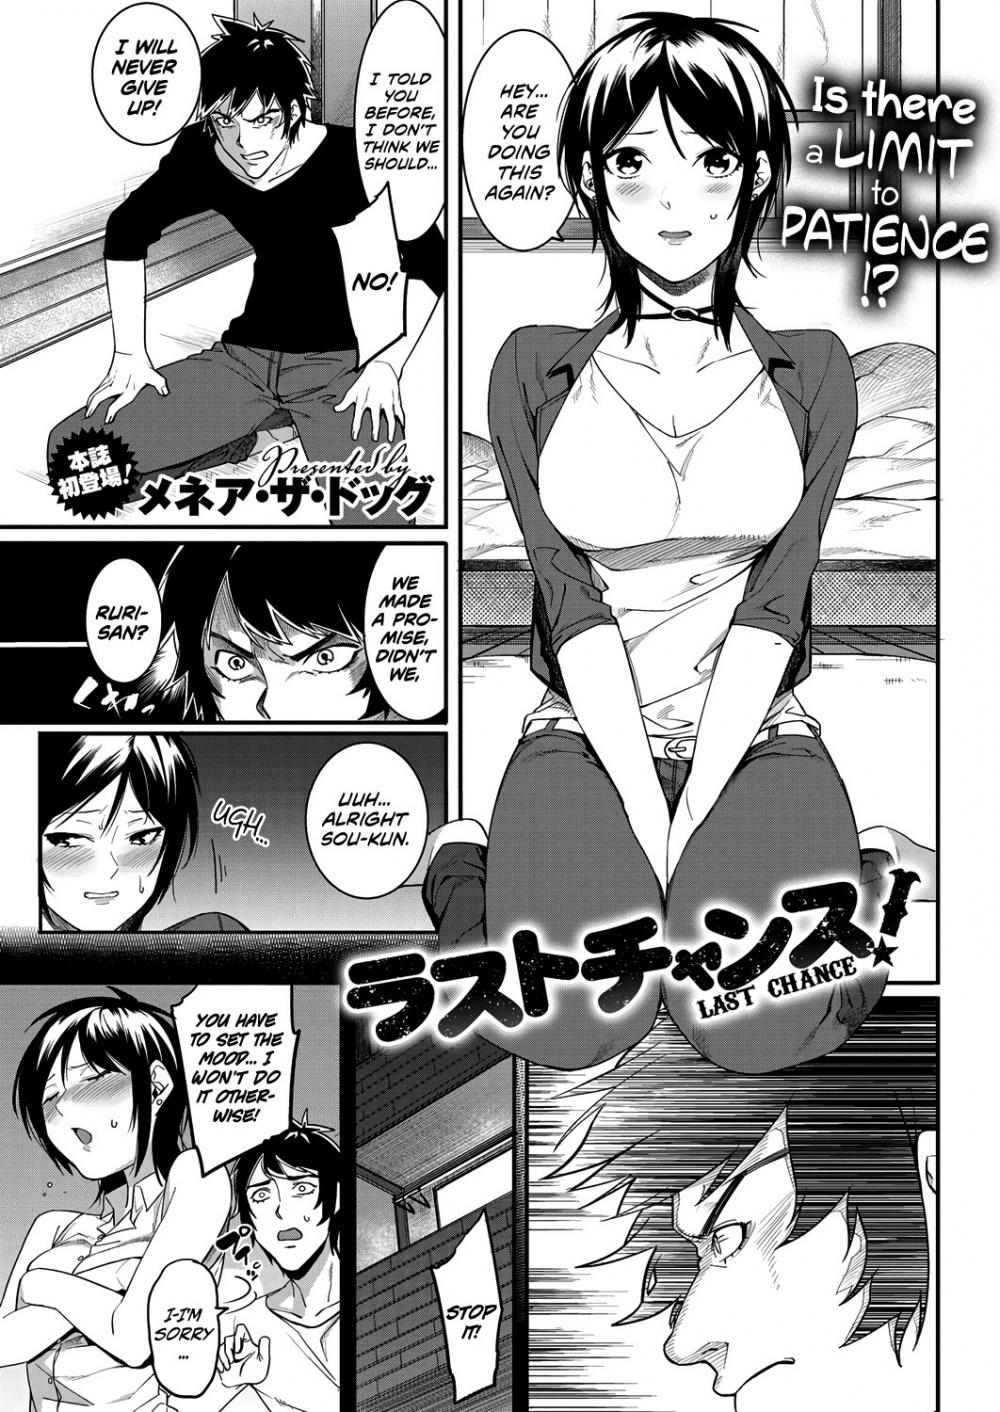 Hentai Manga Comic-Last Chance!-Read-1